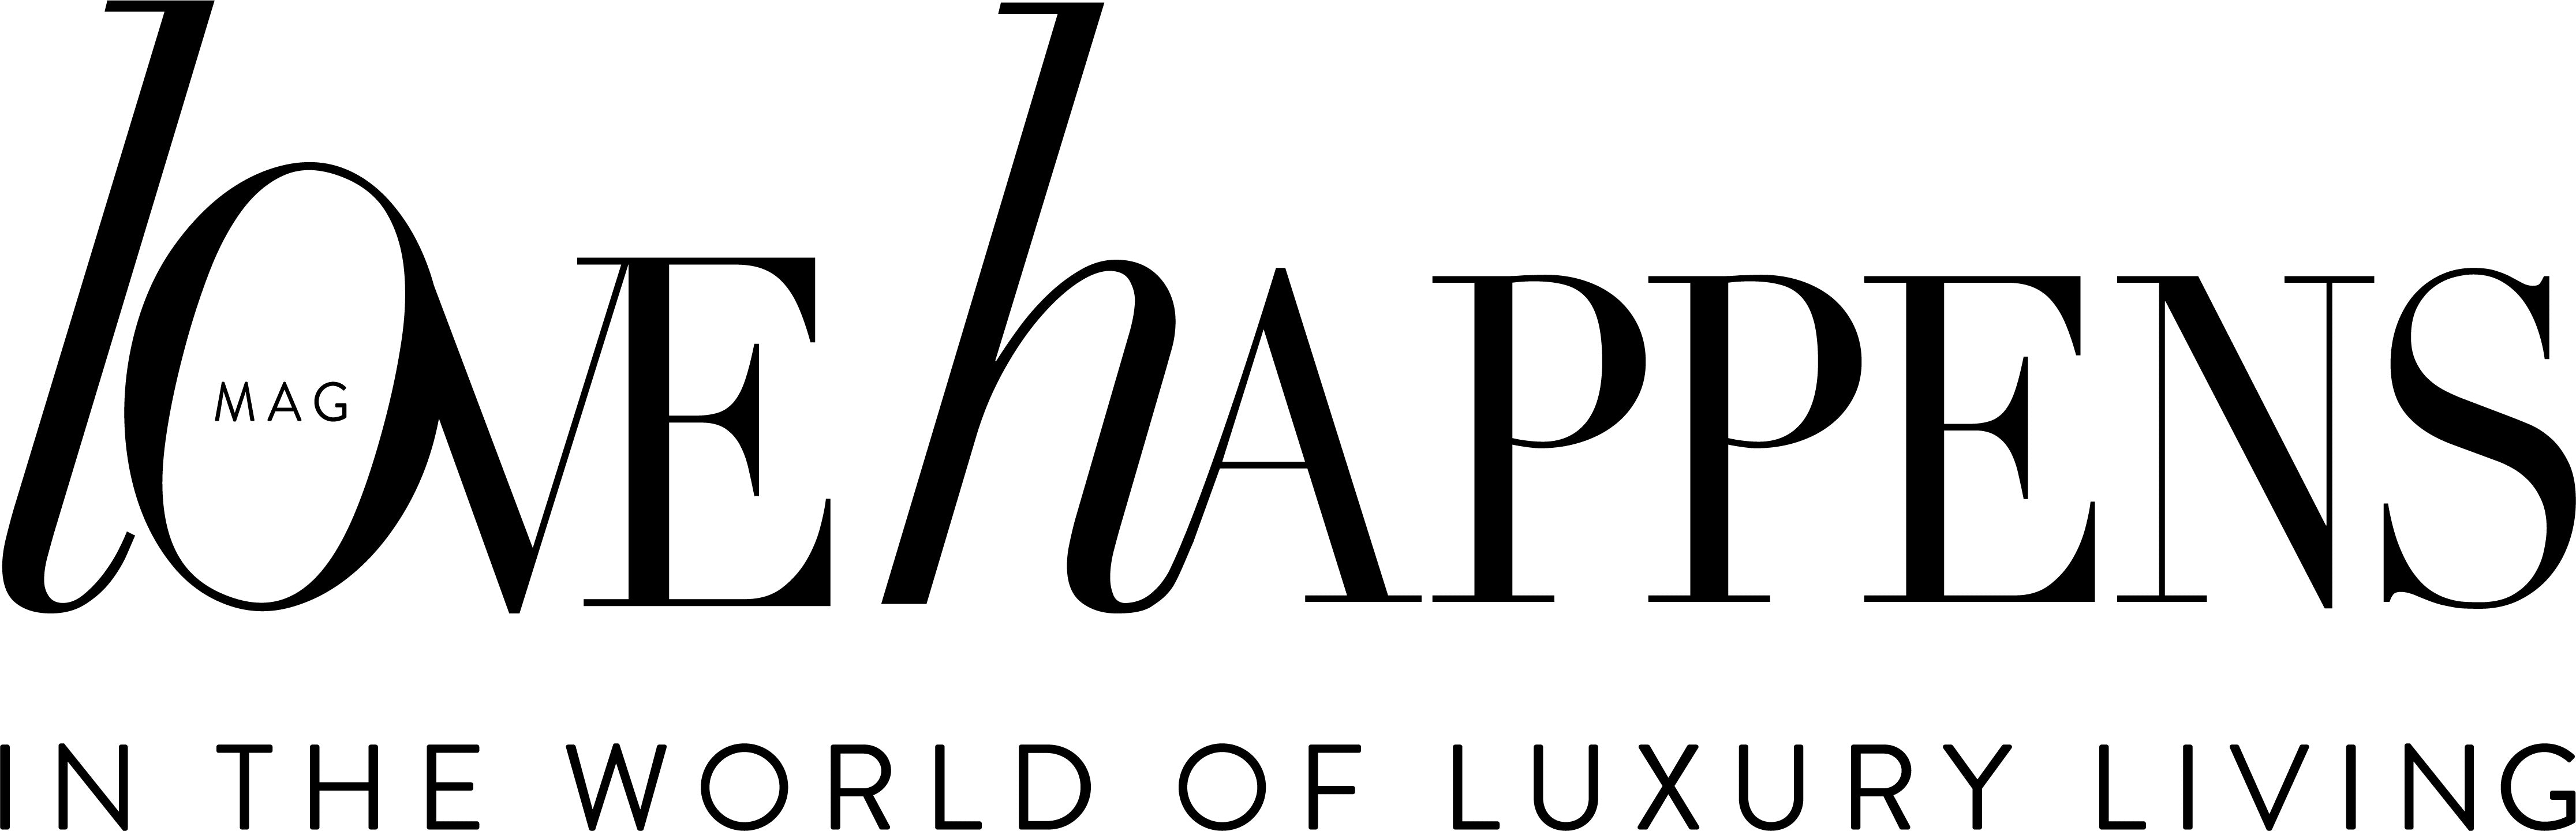 Love Happens Magazine logo | Lèlior Digital Publications